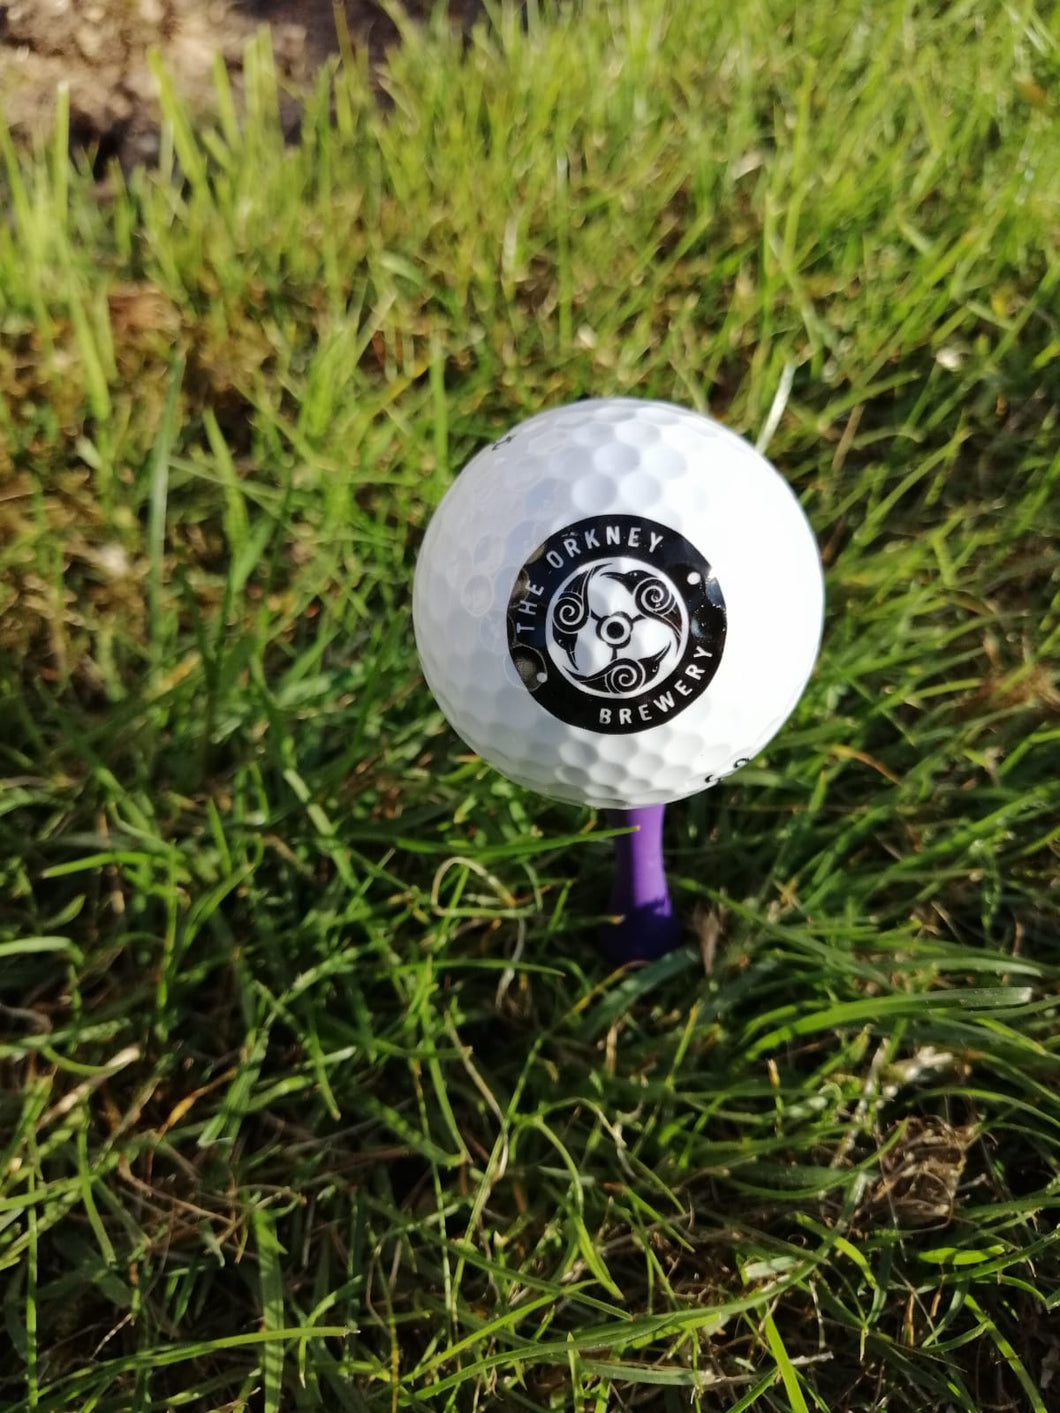 Orkney Brewery Logo Branded Titleist Golf Ball